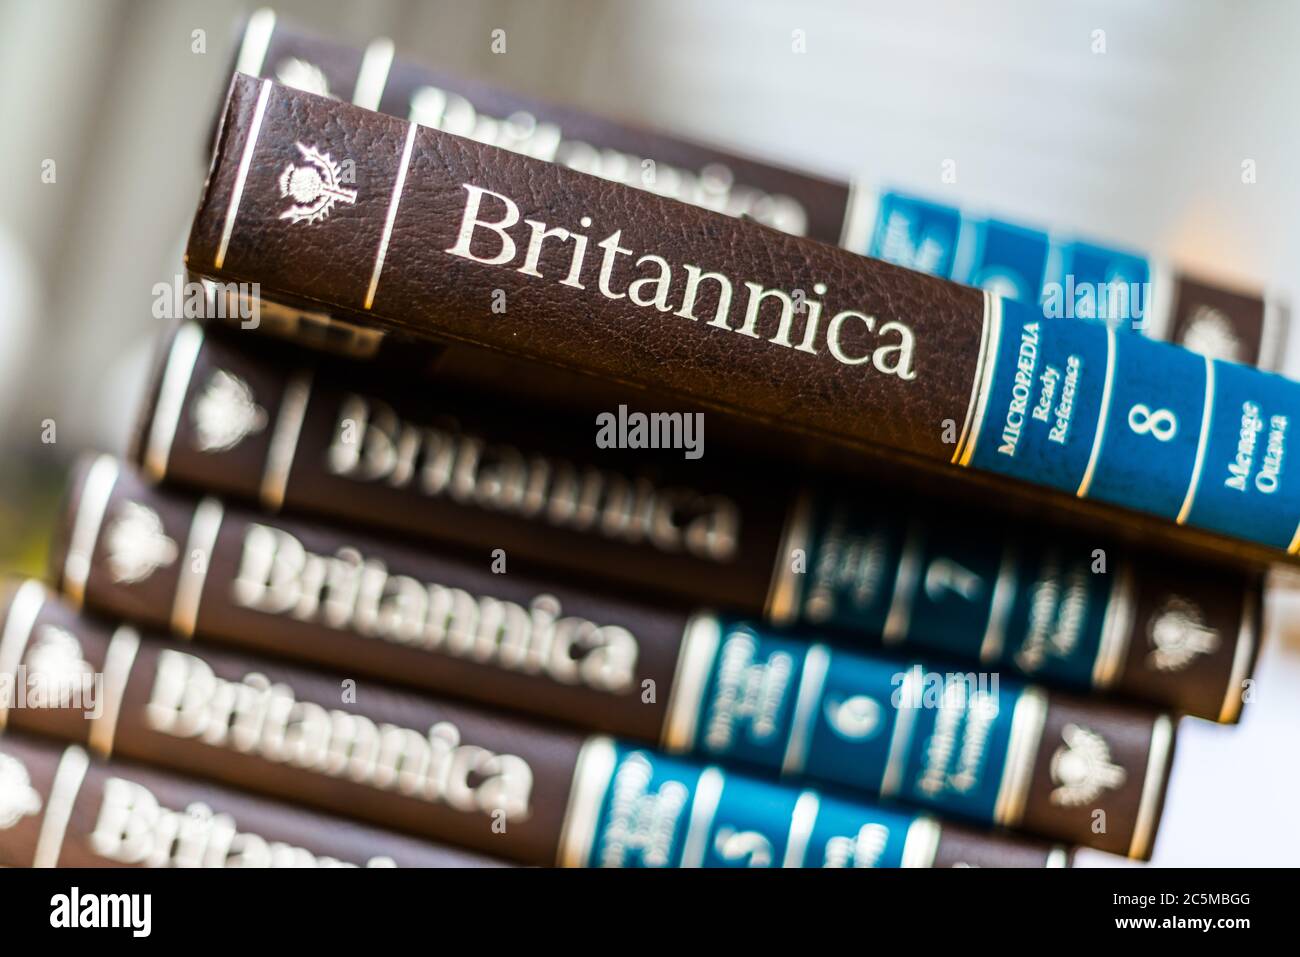 POZNAN, POL - FEB 03, 2020: Encyclopedia Britannica volumes in a public library Stock Photo